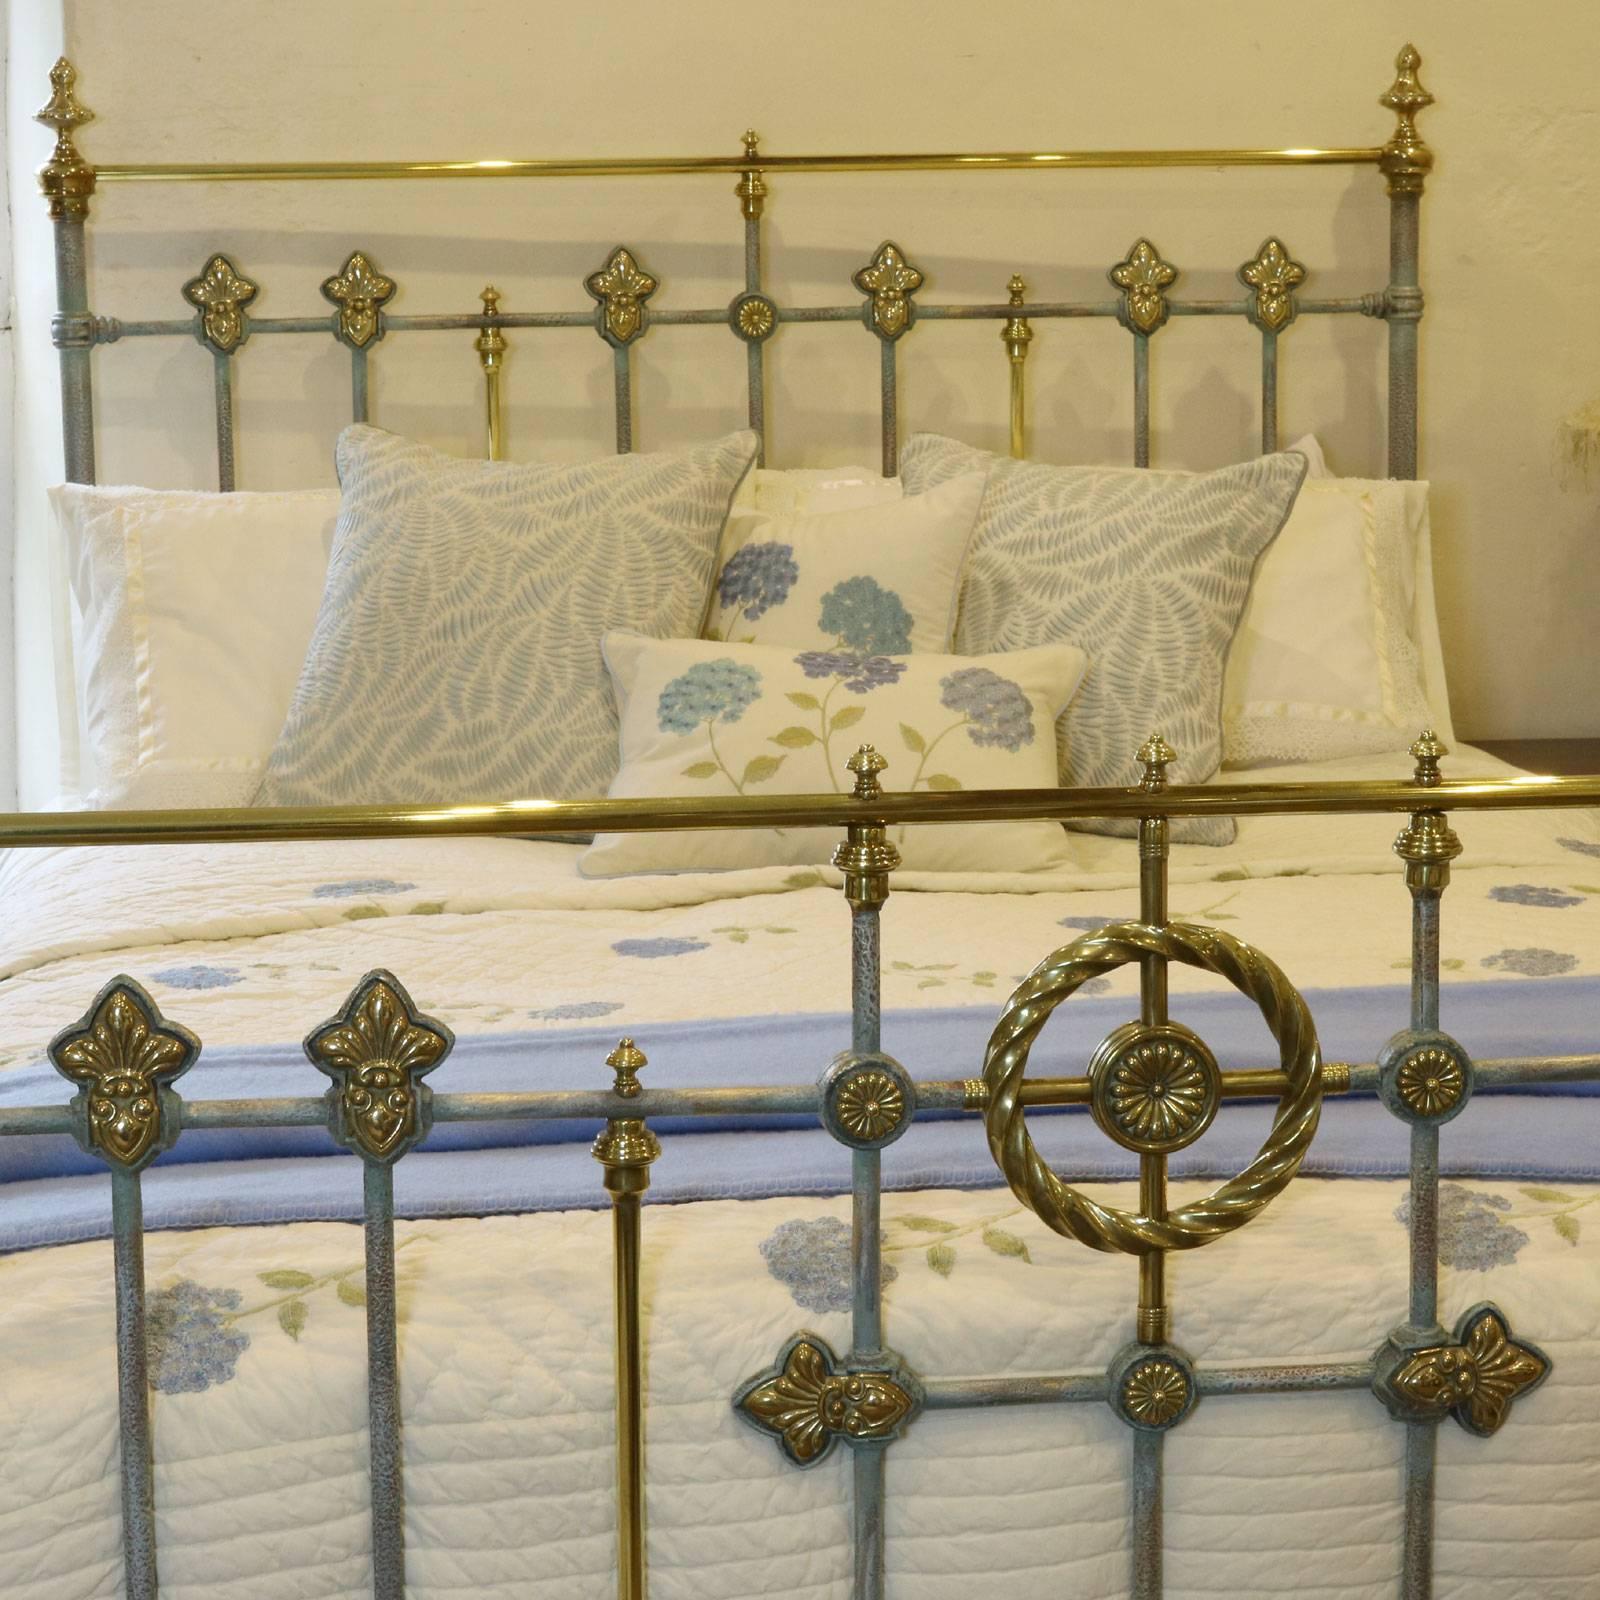 Victorian Blue Verdigris Decorative Brass and Iron Bed